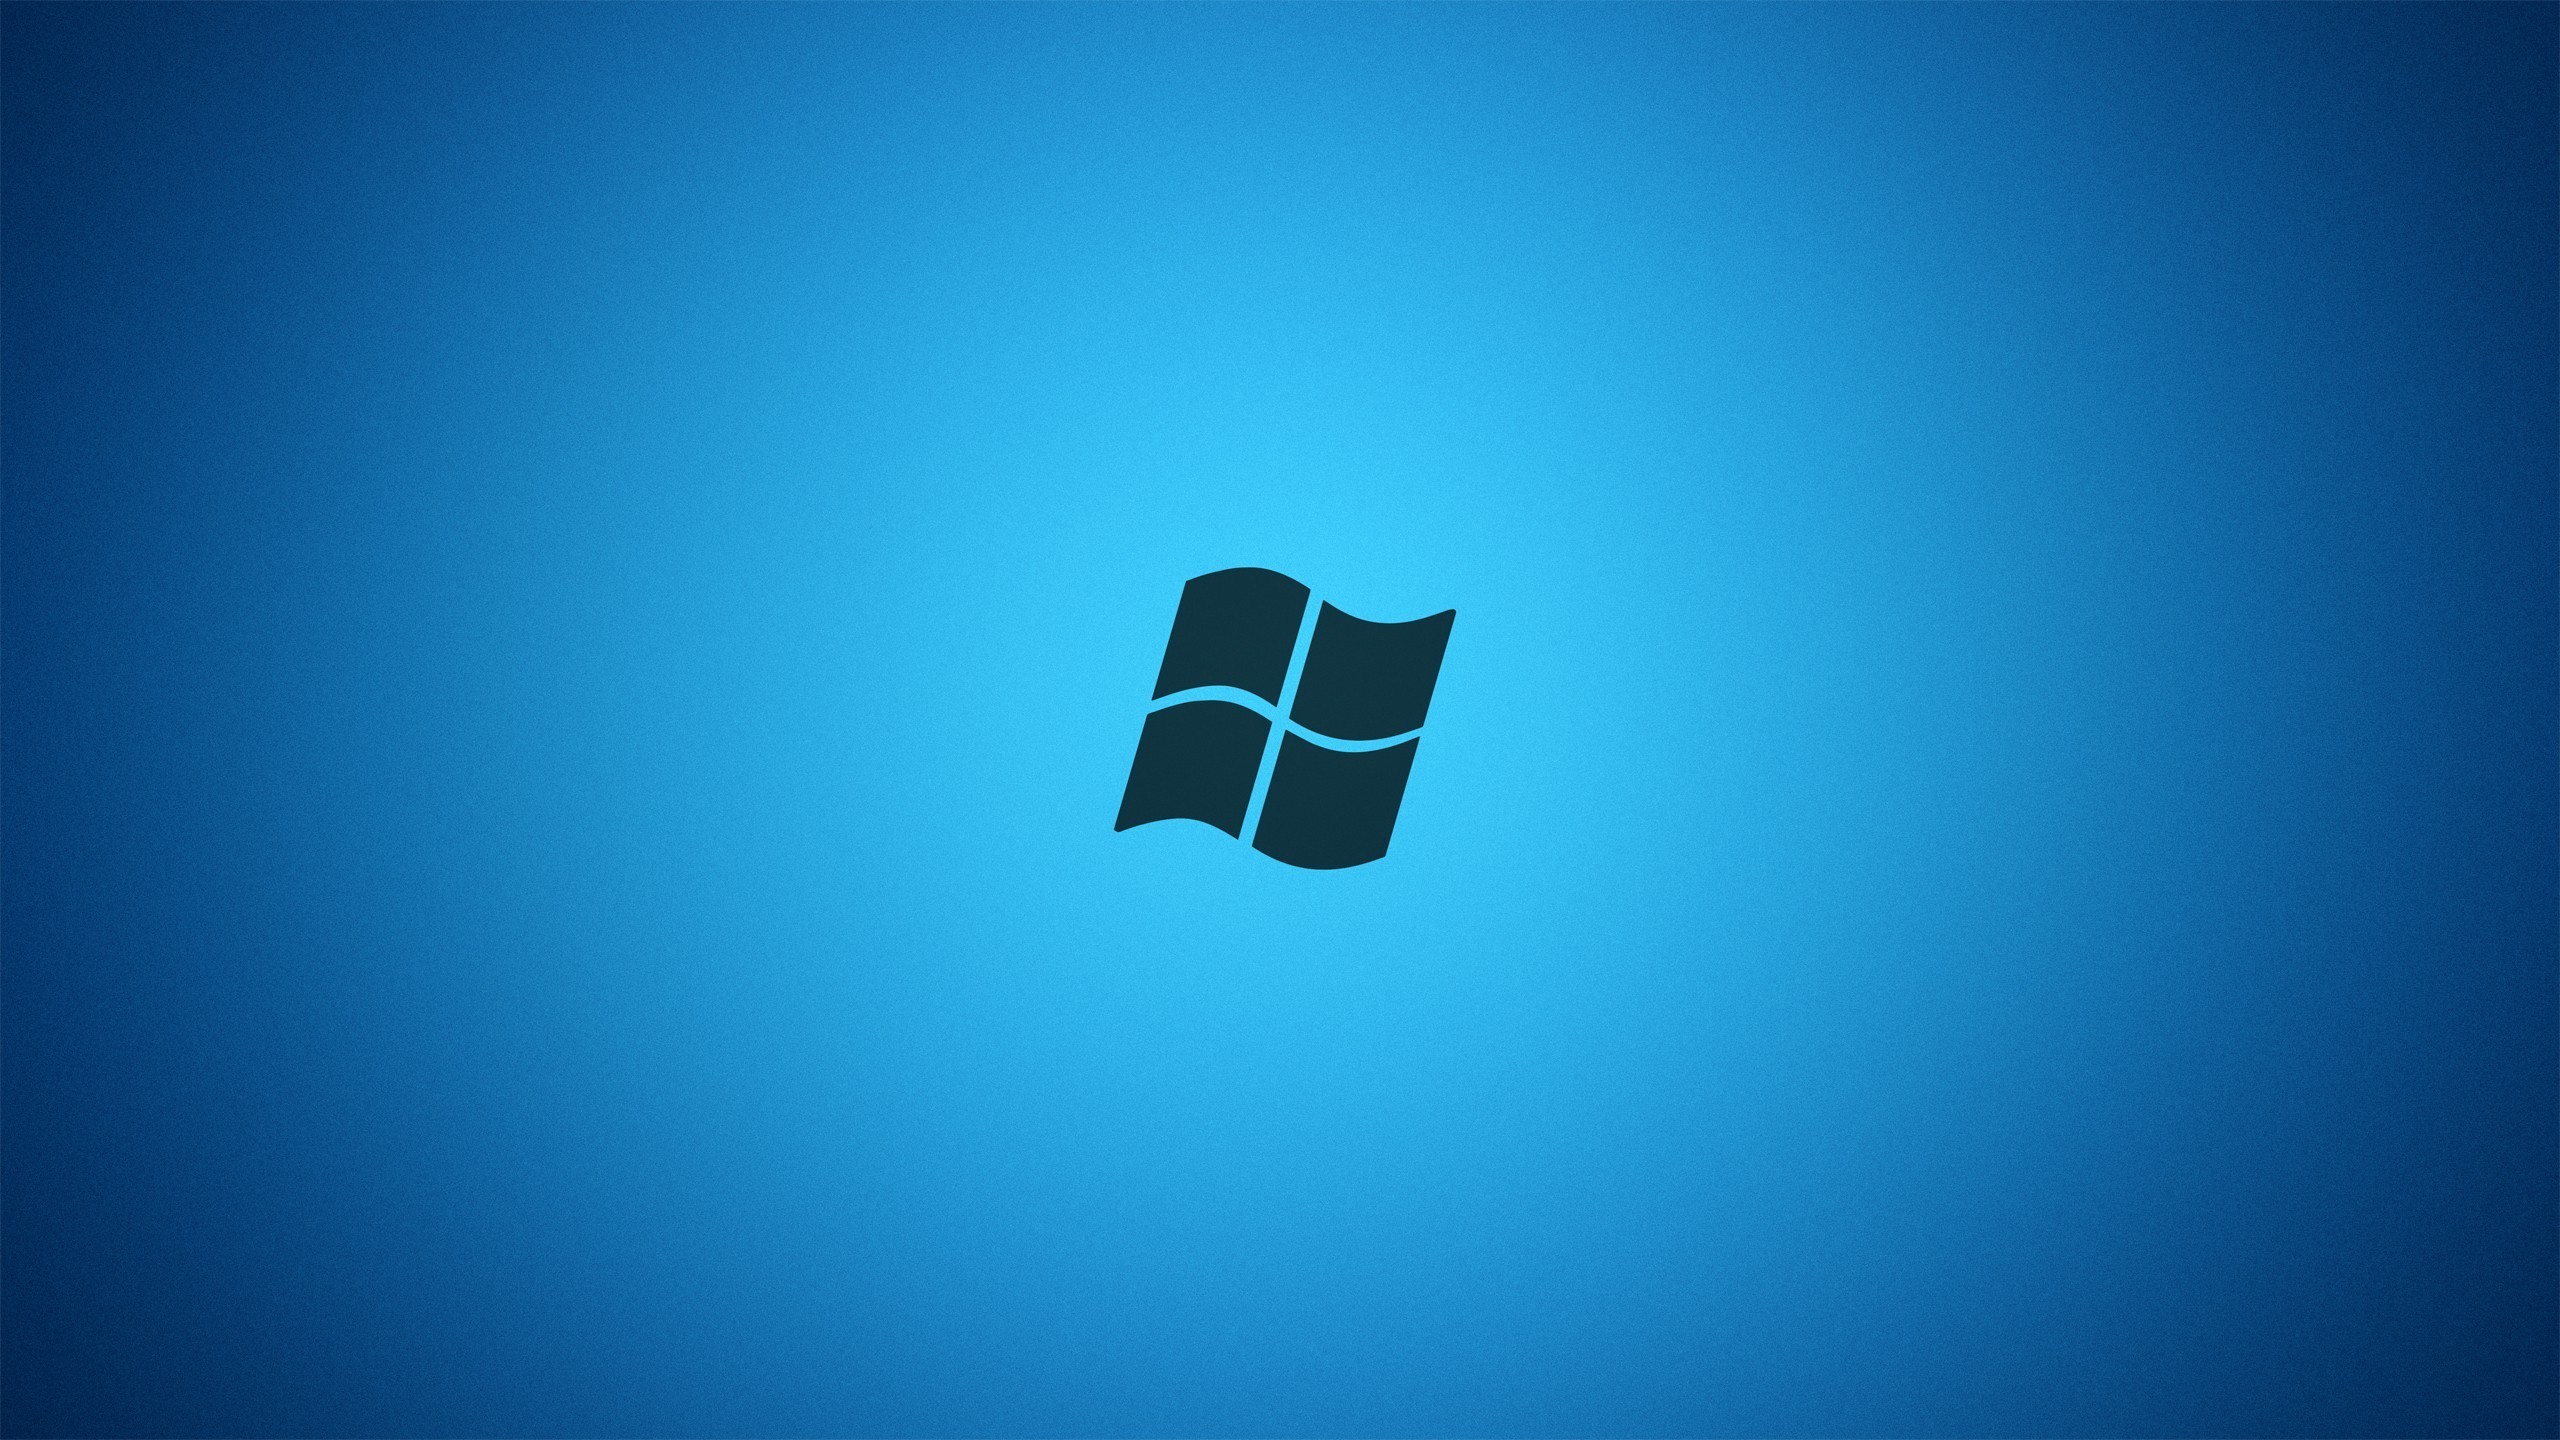 2560x1440 illustration minimalism blue background text logo blue circle Microsoft  Windows brand Windows 7 hand shape number